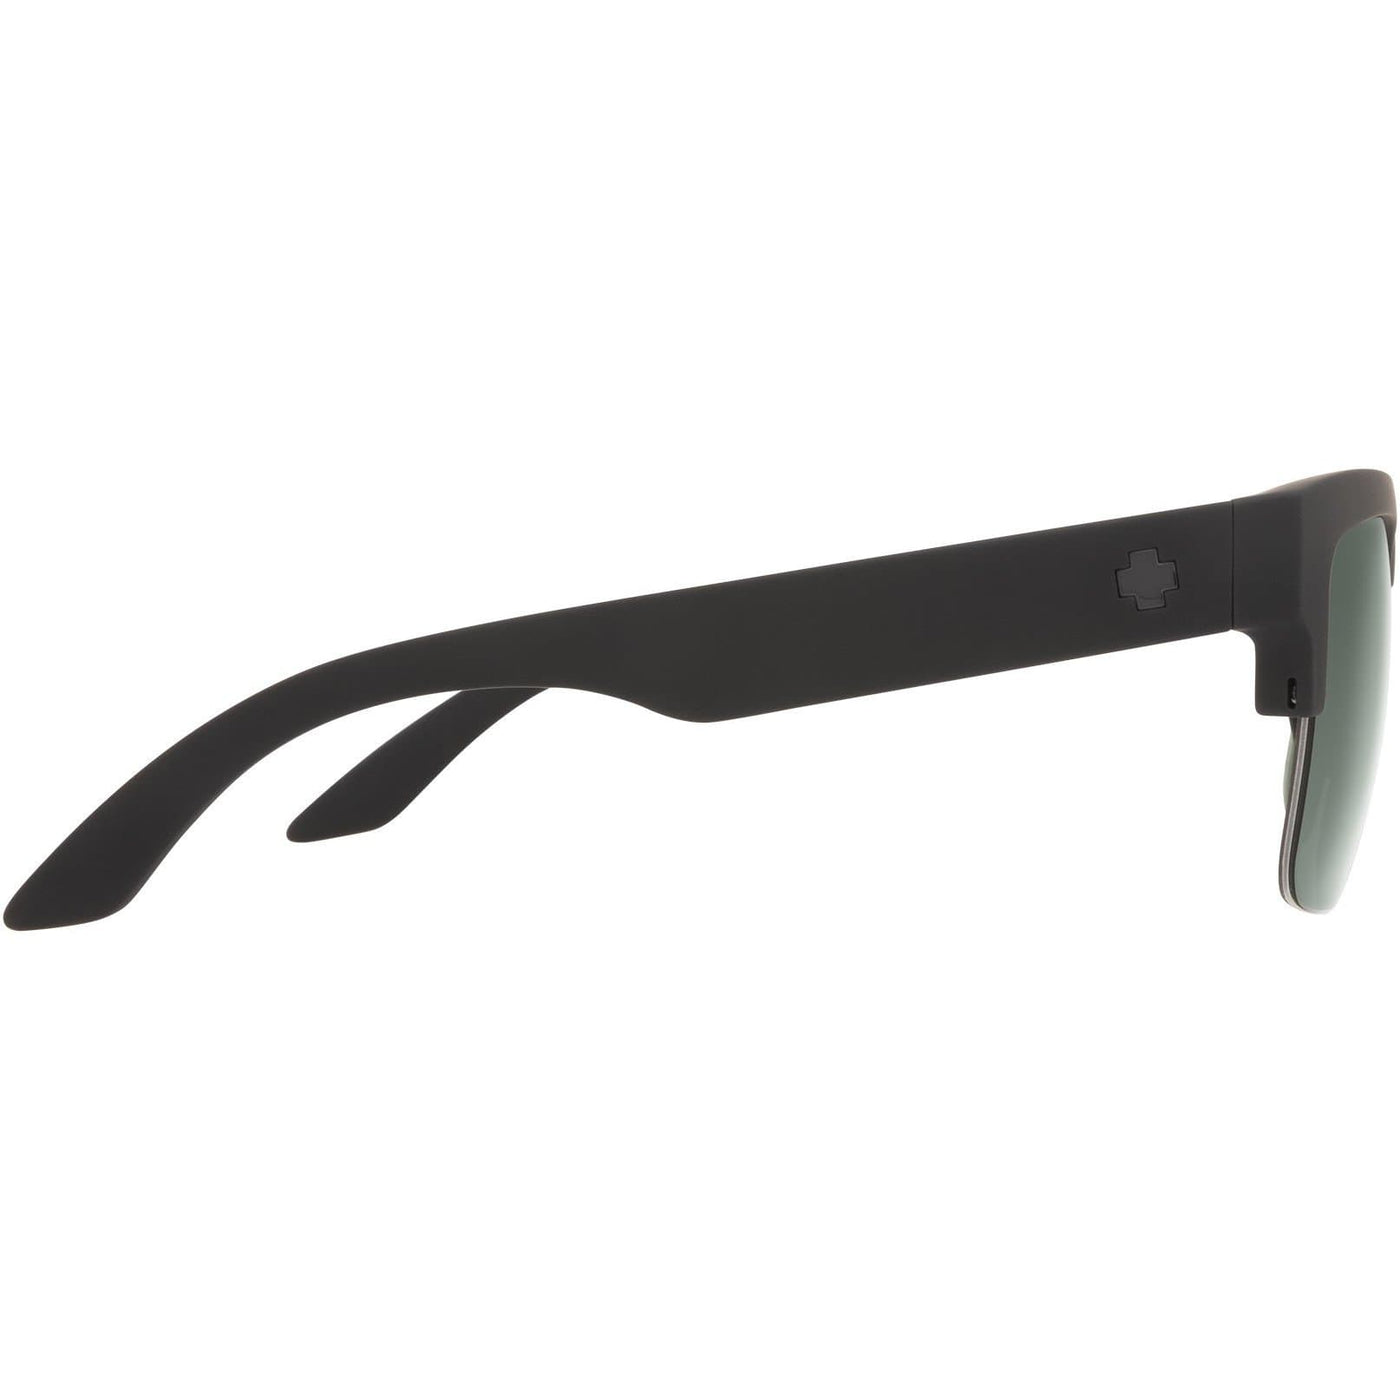 SPY DISCORD 5050 Polarized Sunglasses - Gray/Green 8Lines Shop - Fast Shipping